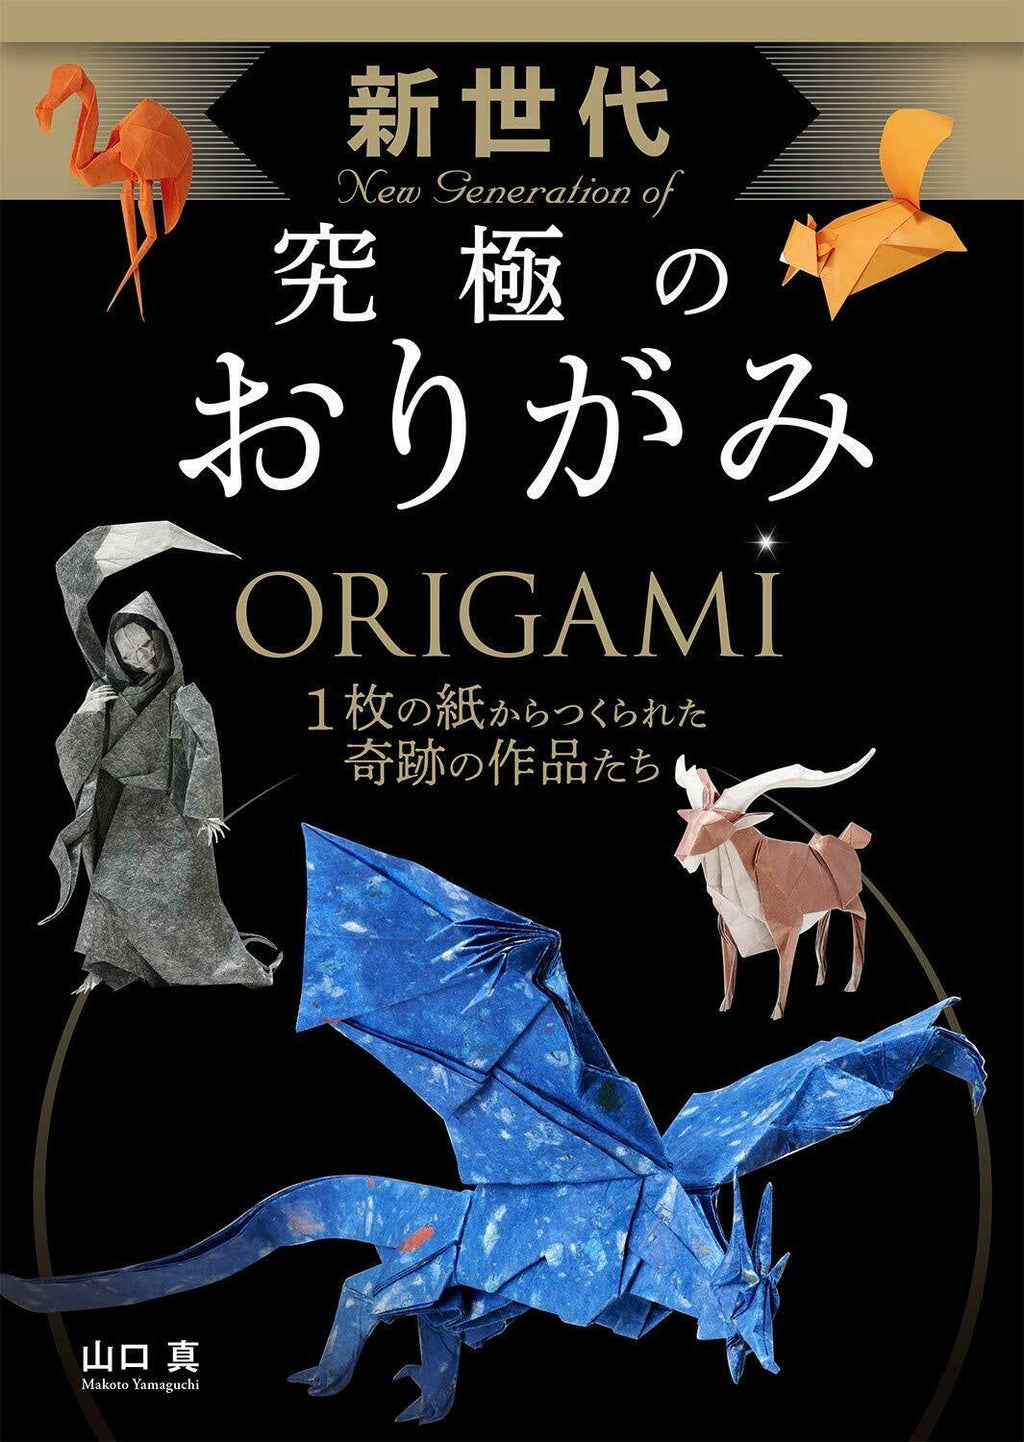 NEW' New Generation of ORIGAMI Makoto Yamaguchi | JAPAN Book Folding Diagram